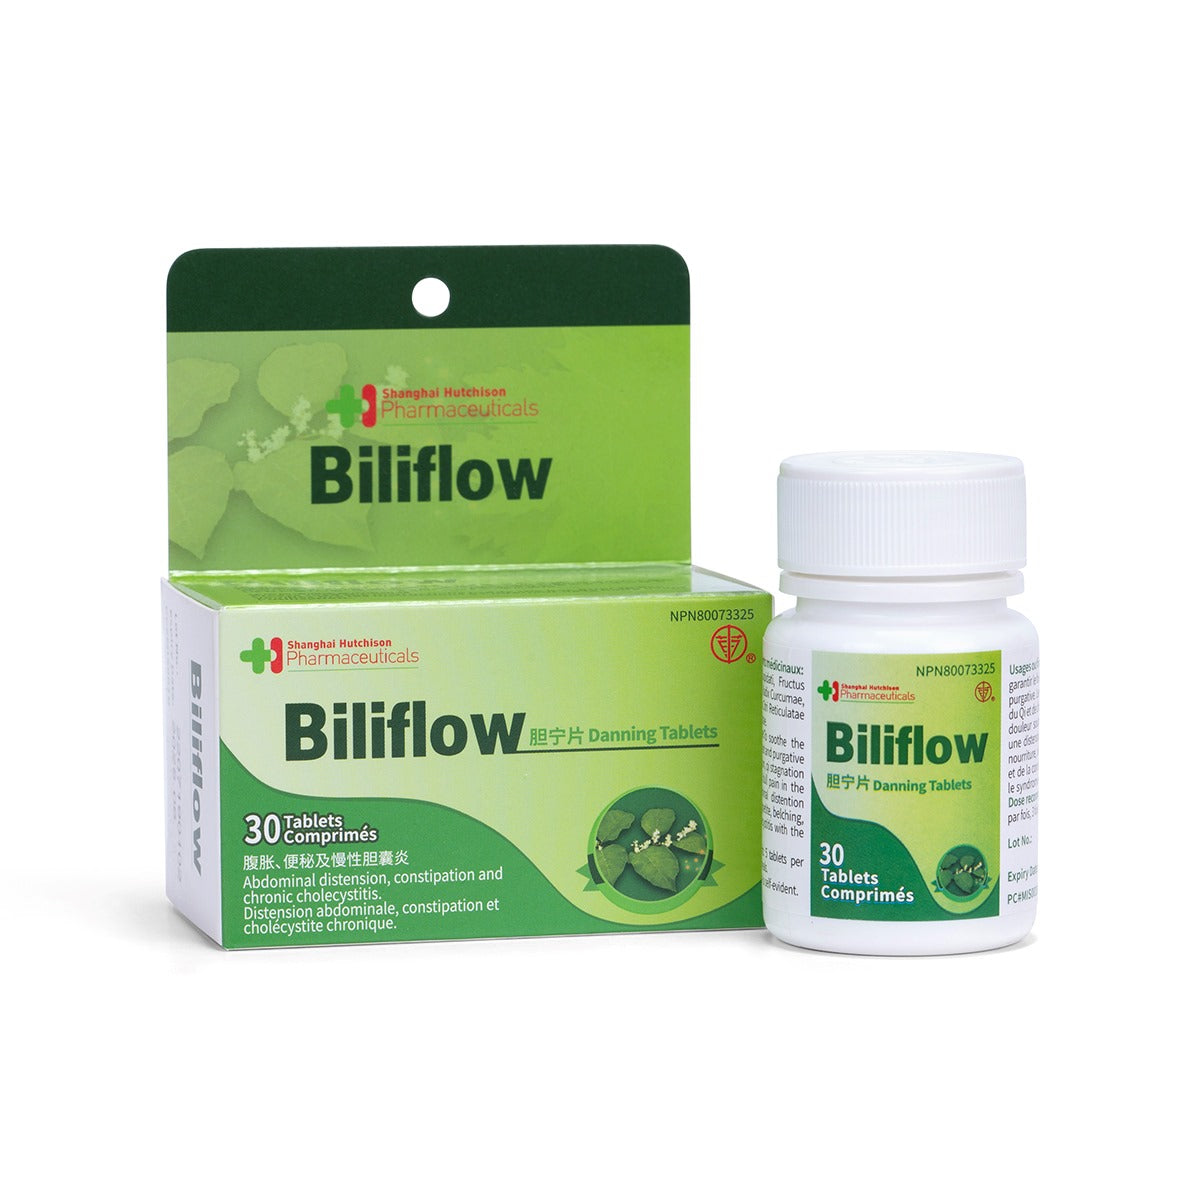 Biliflow Danning Tablets 